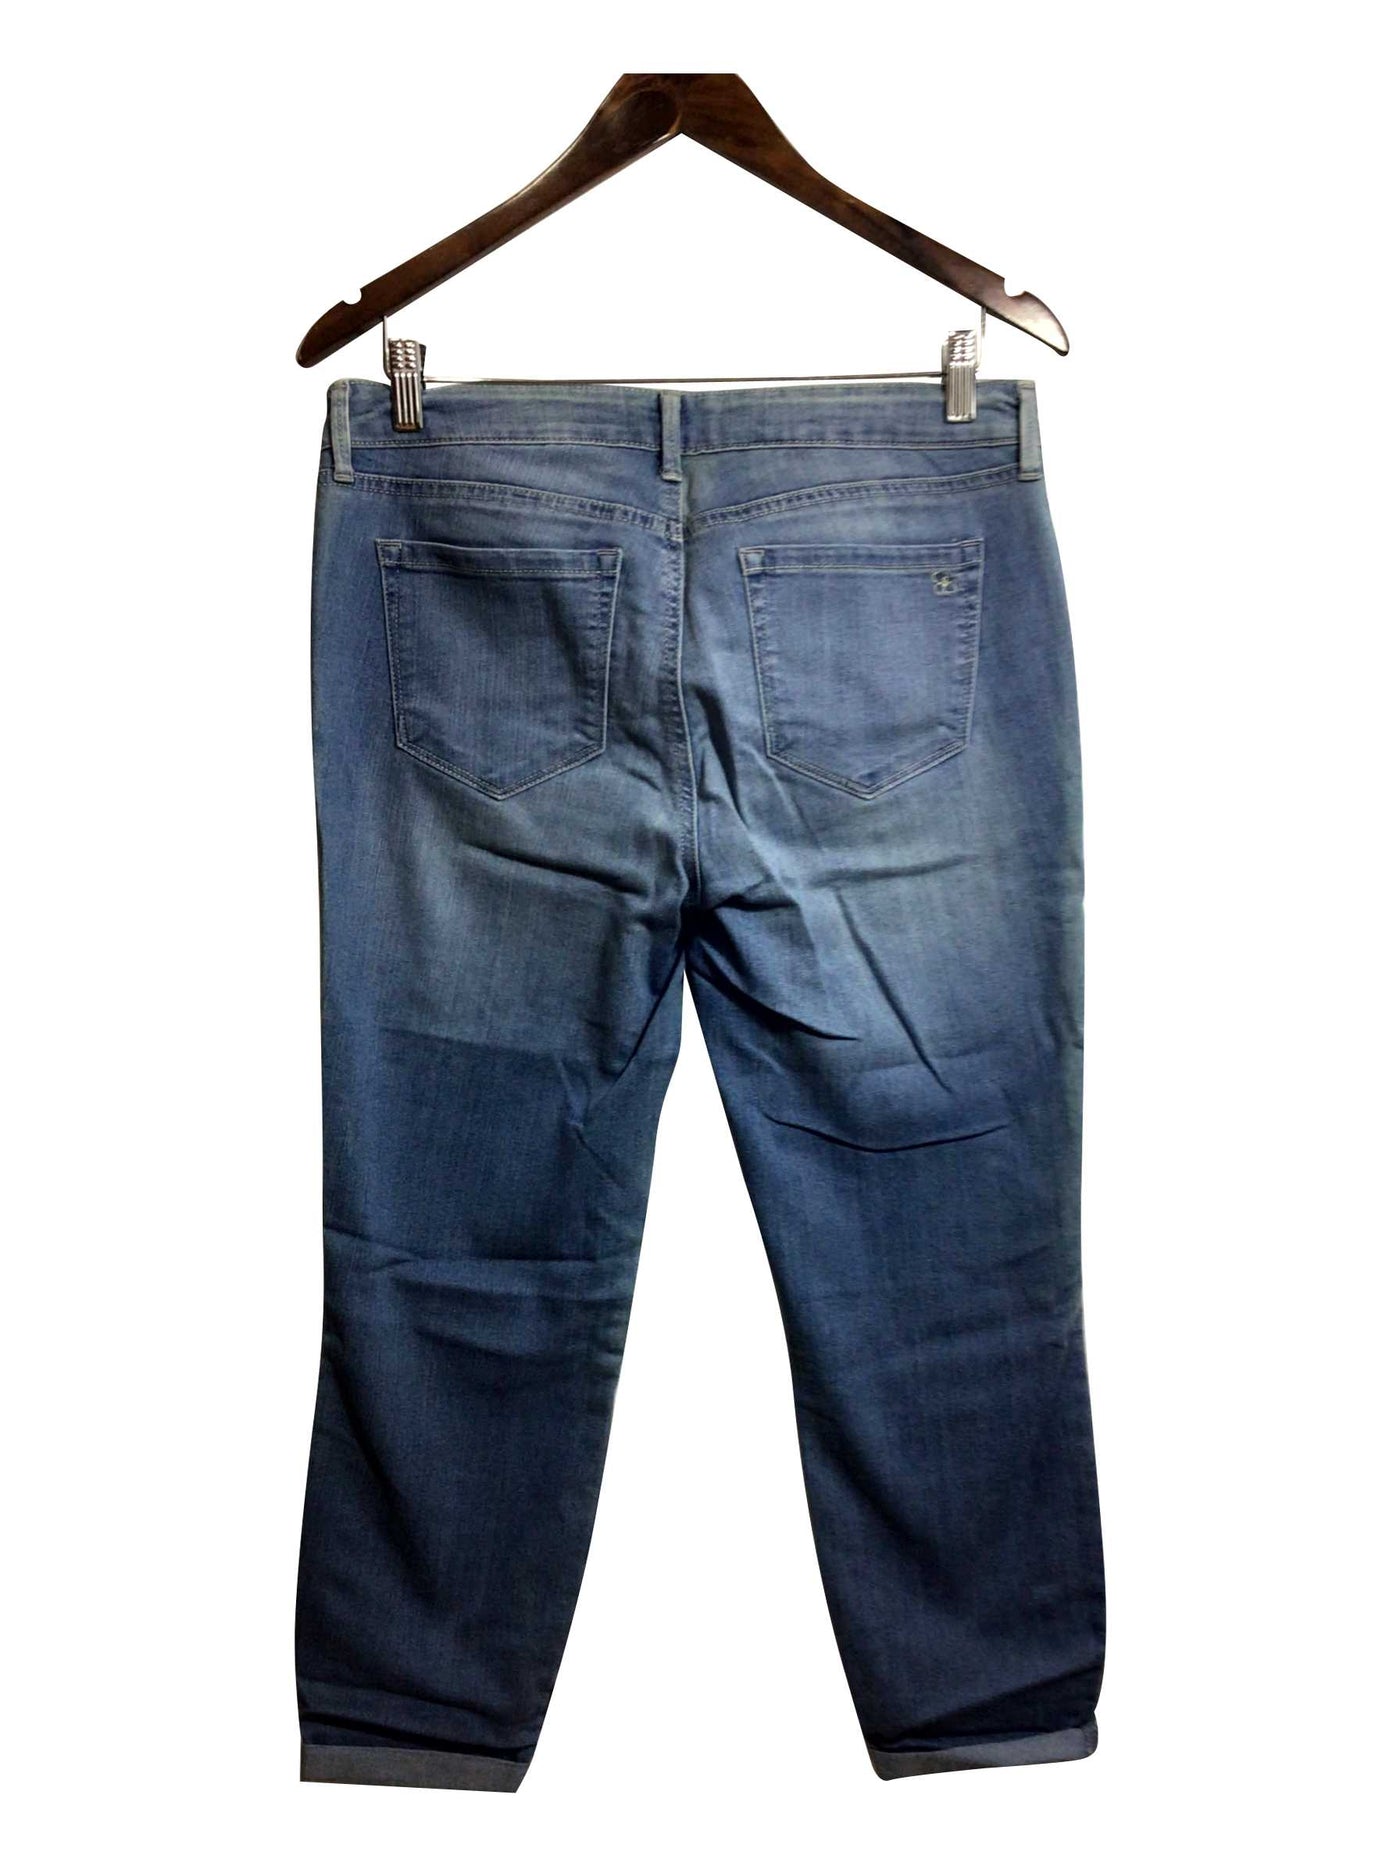 JESSICA SIMPSON Regular fit Straight-legged Jeans in Blue - Size 30 | 27.4 $ KOOP